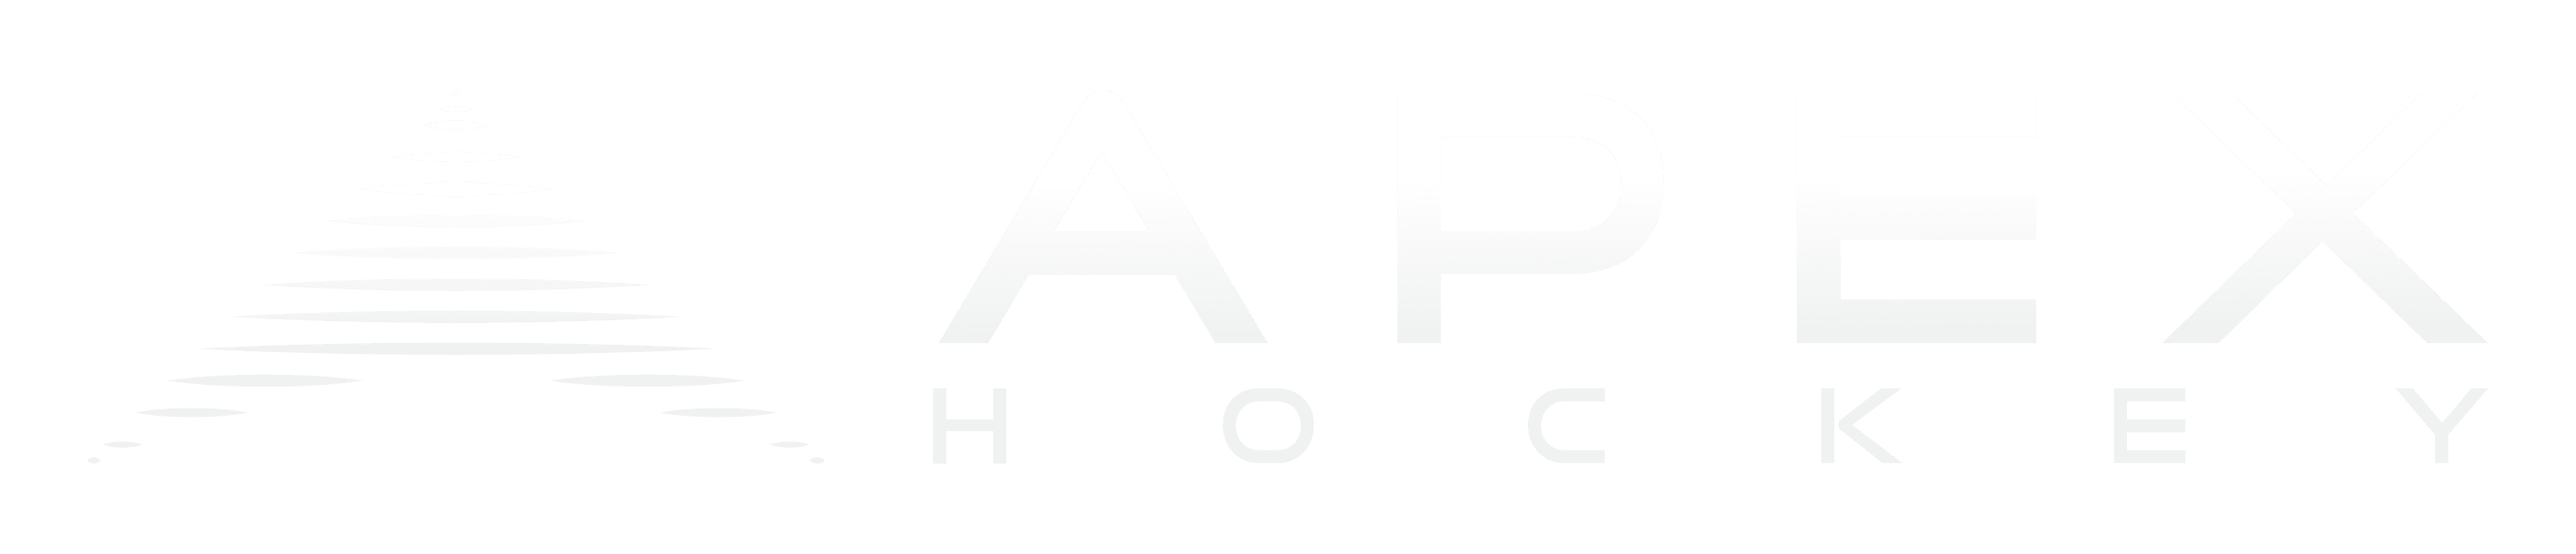 Apex Skating company logo